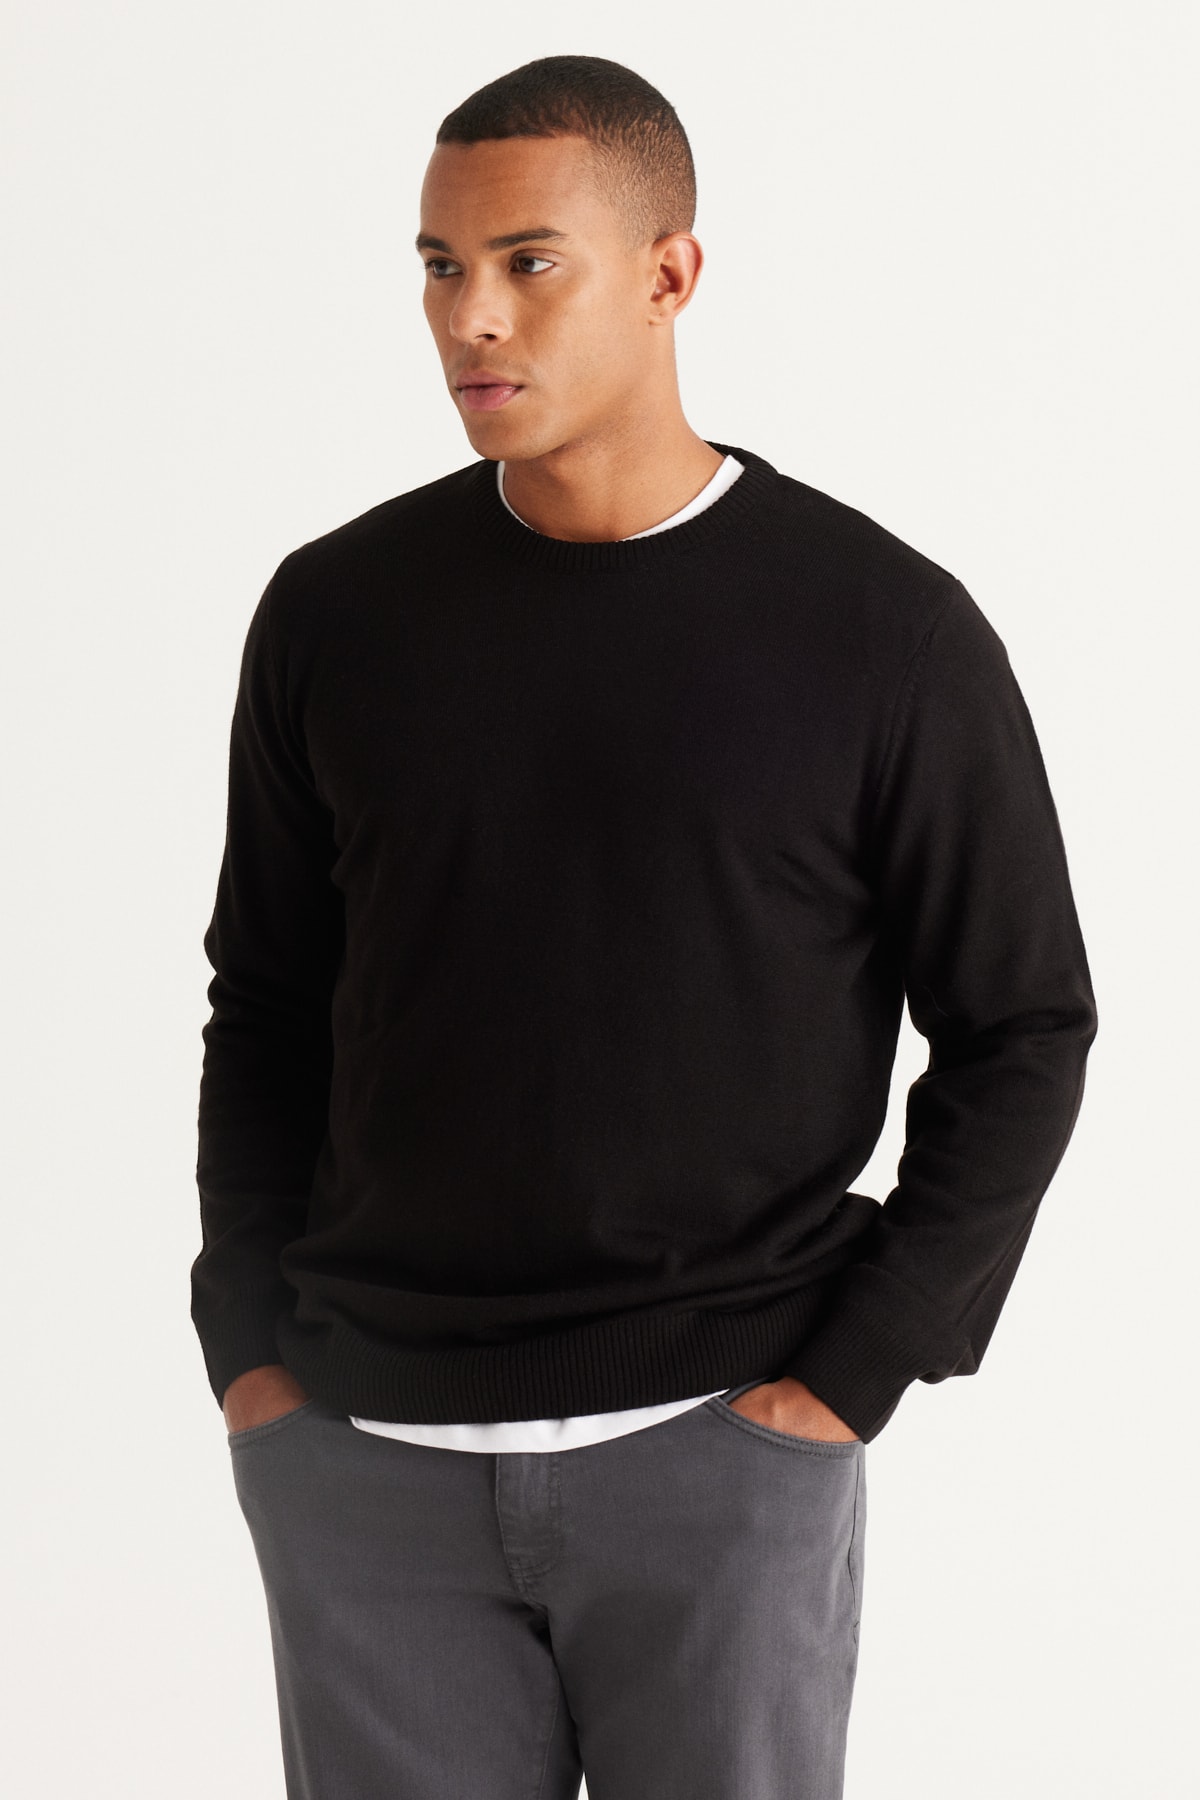 Levně ALTINYILDIZ CLASSICS Men's Black Standard Fit Normal Cut, Crew Neck Knitwear Sweater.